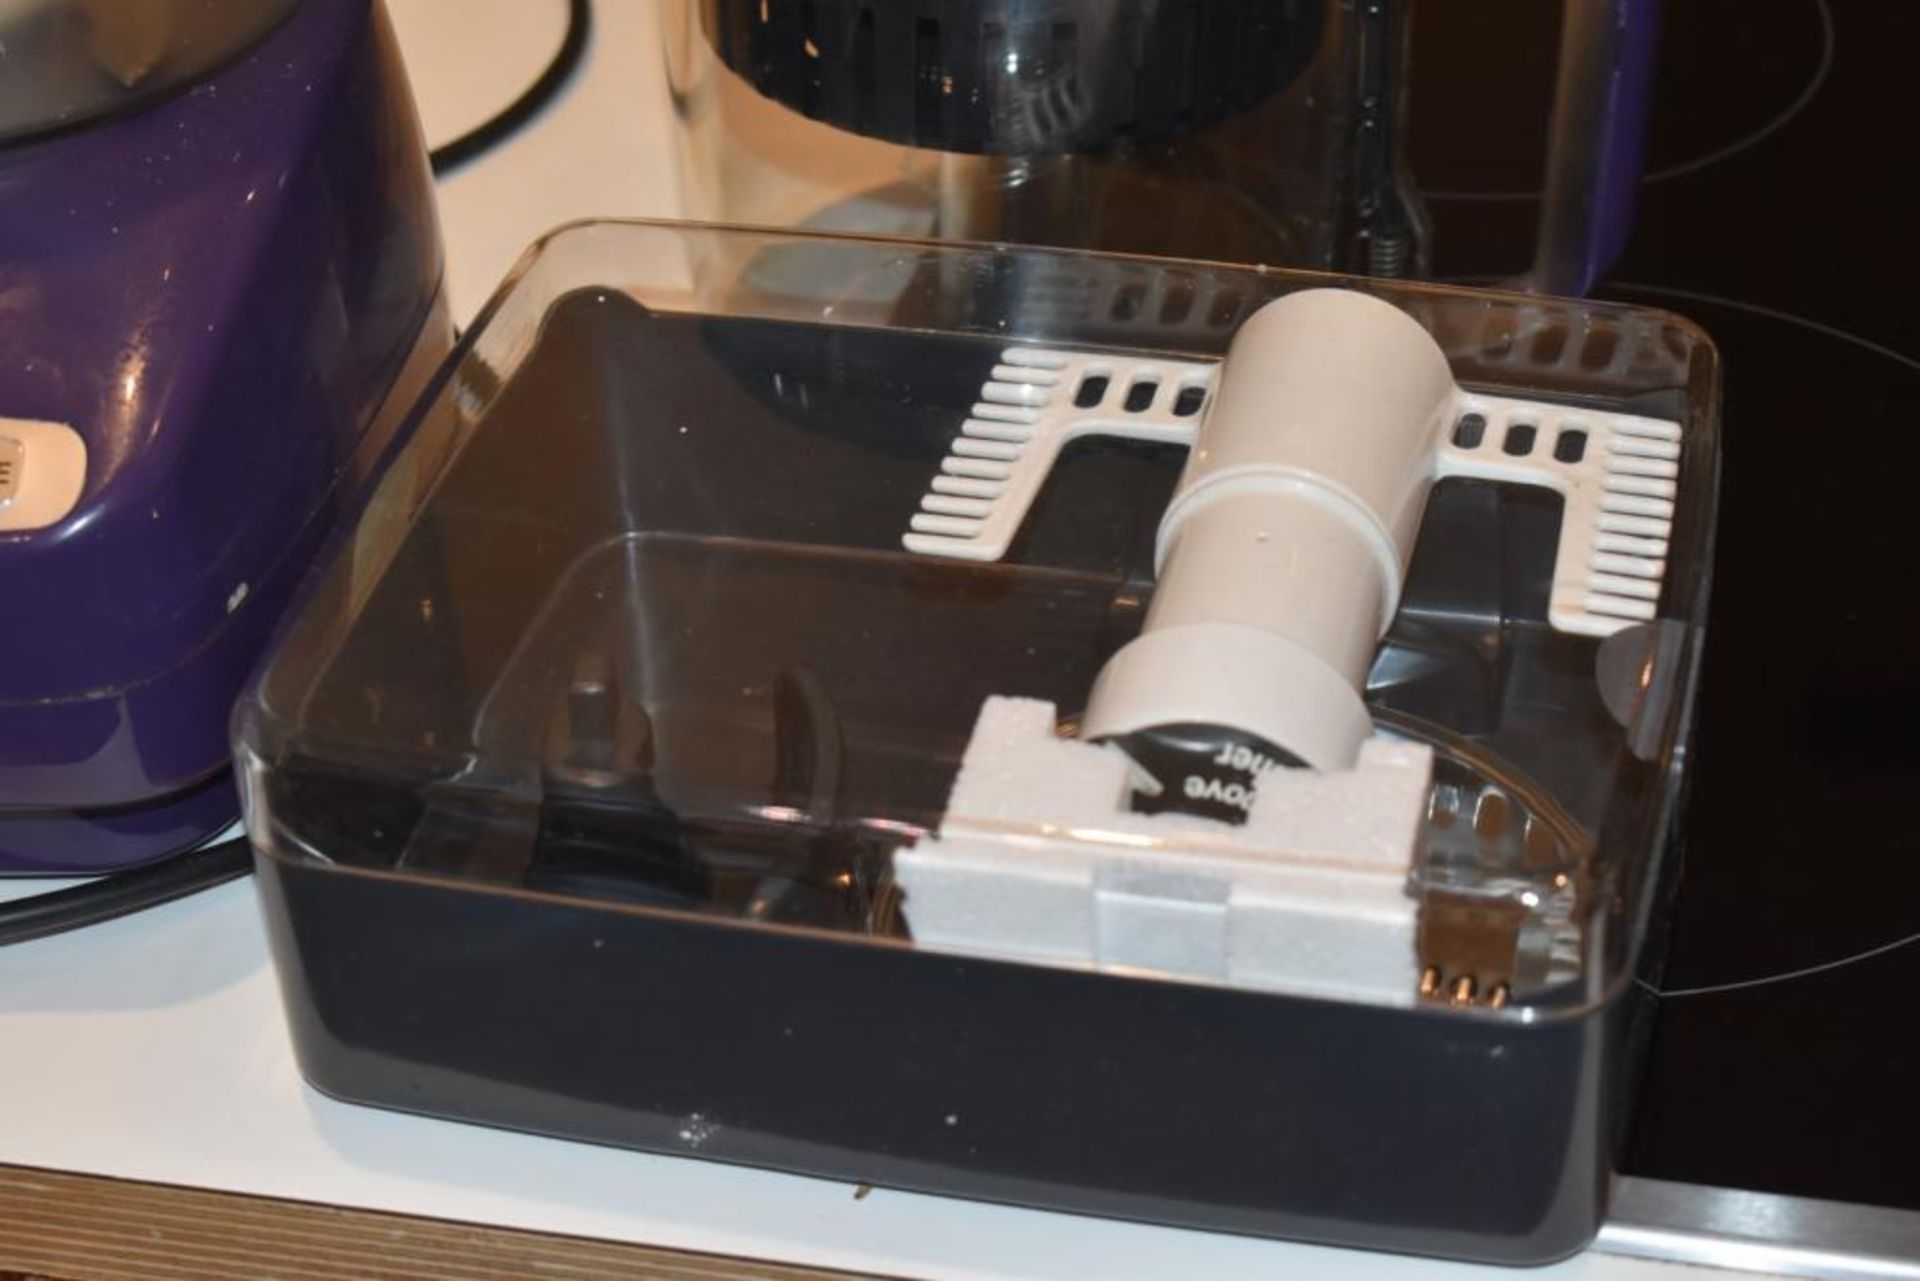 1 x Megamix Mini Plus Food Mixer With Accessories - Model 18240 - CL489 - Location: Putney, - Image 3 of 3